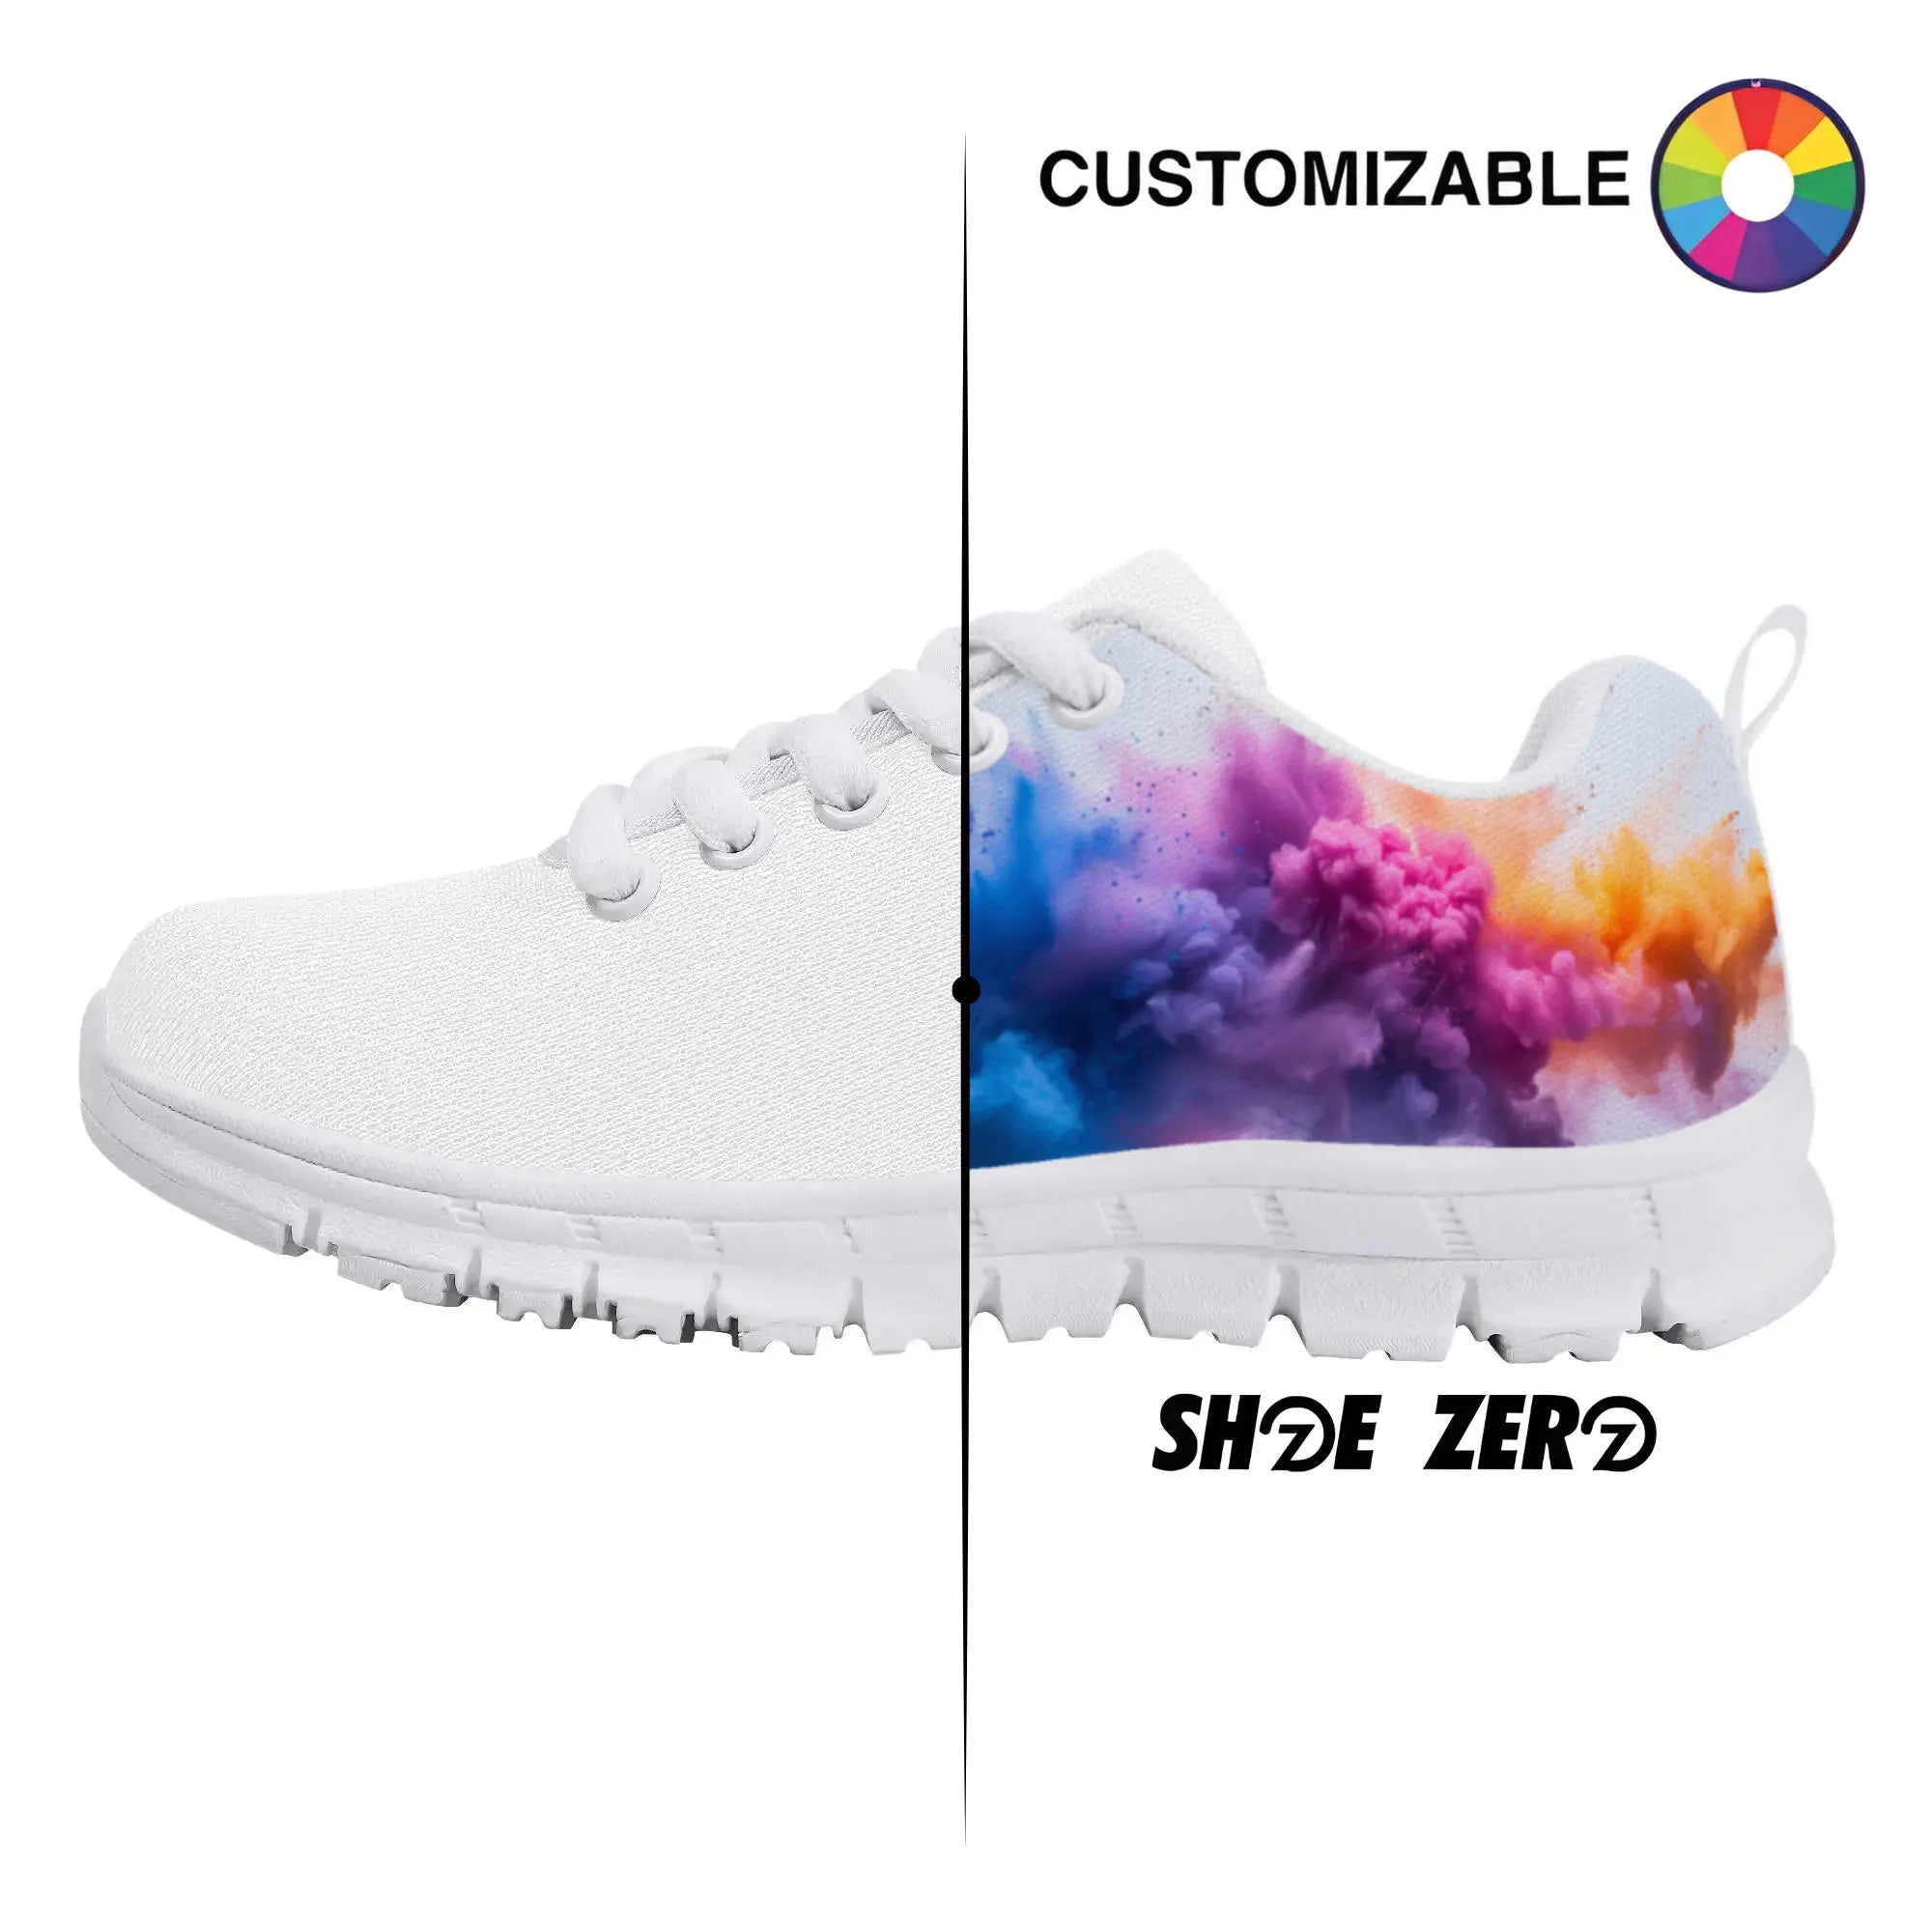 Customizable Kids Running Shoes - White